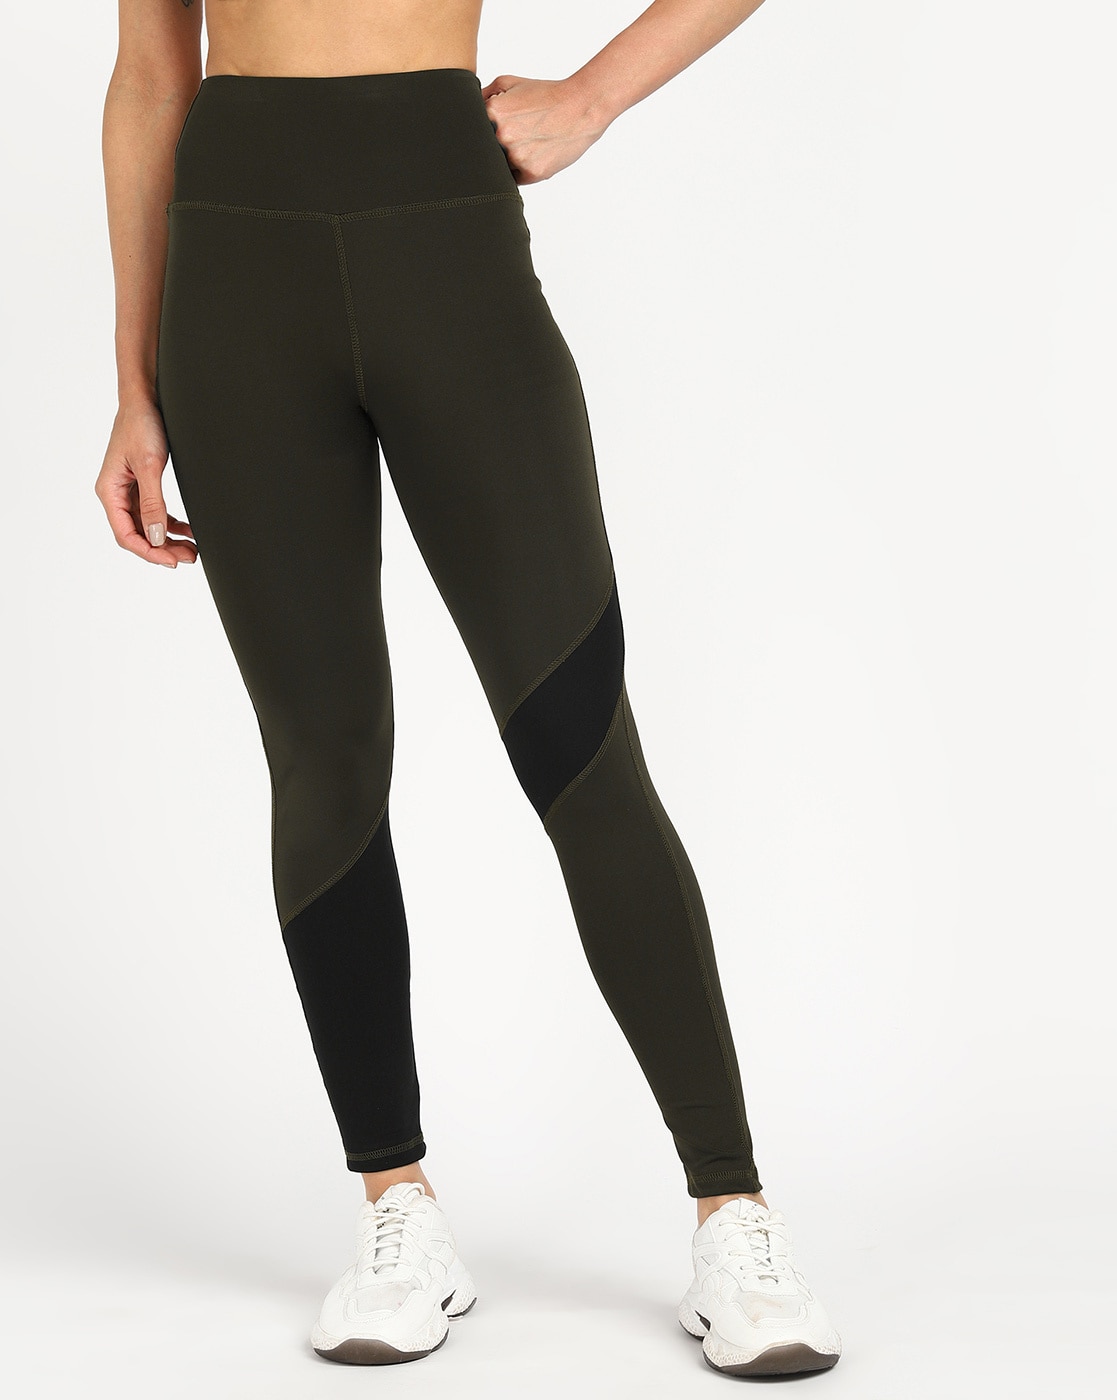 Rock Paper Scissors Premium Gym wear/Active Wear Tights Strechable Leggings  Yoga Pants Camouflage Gym Tight